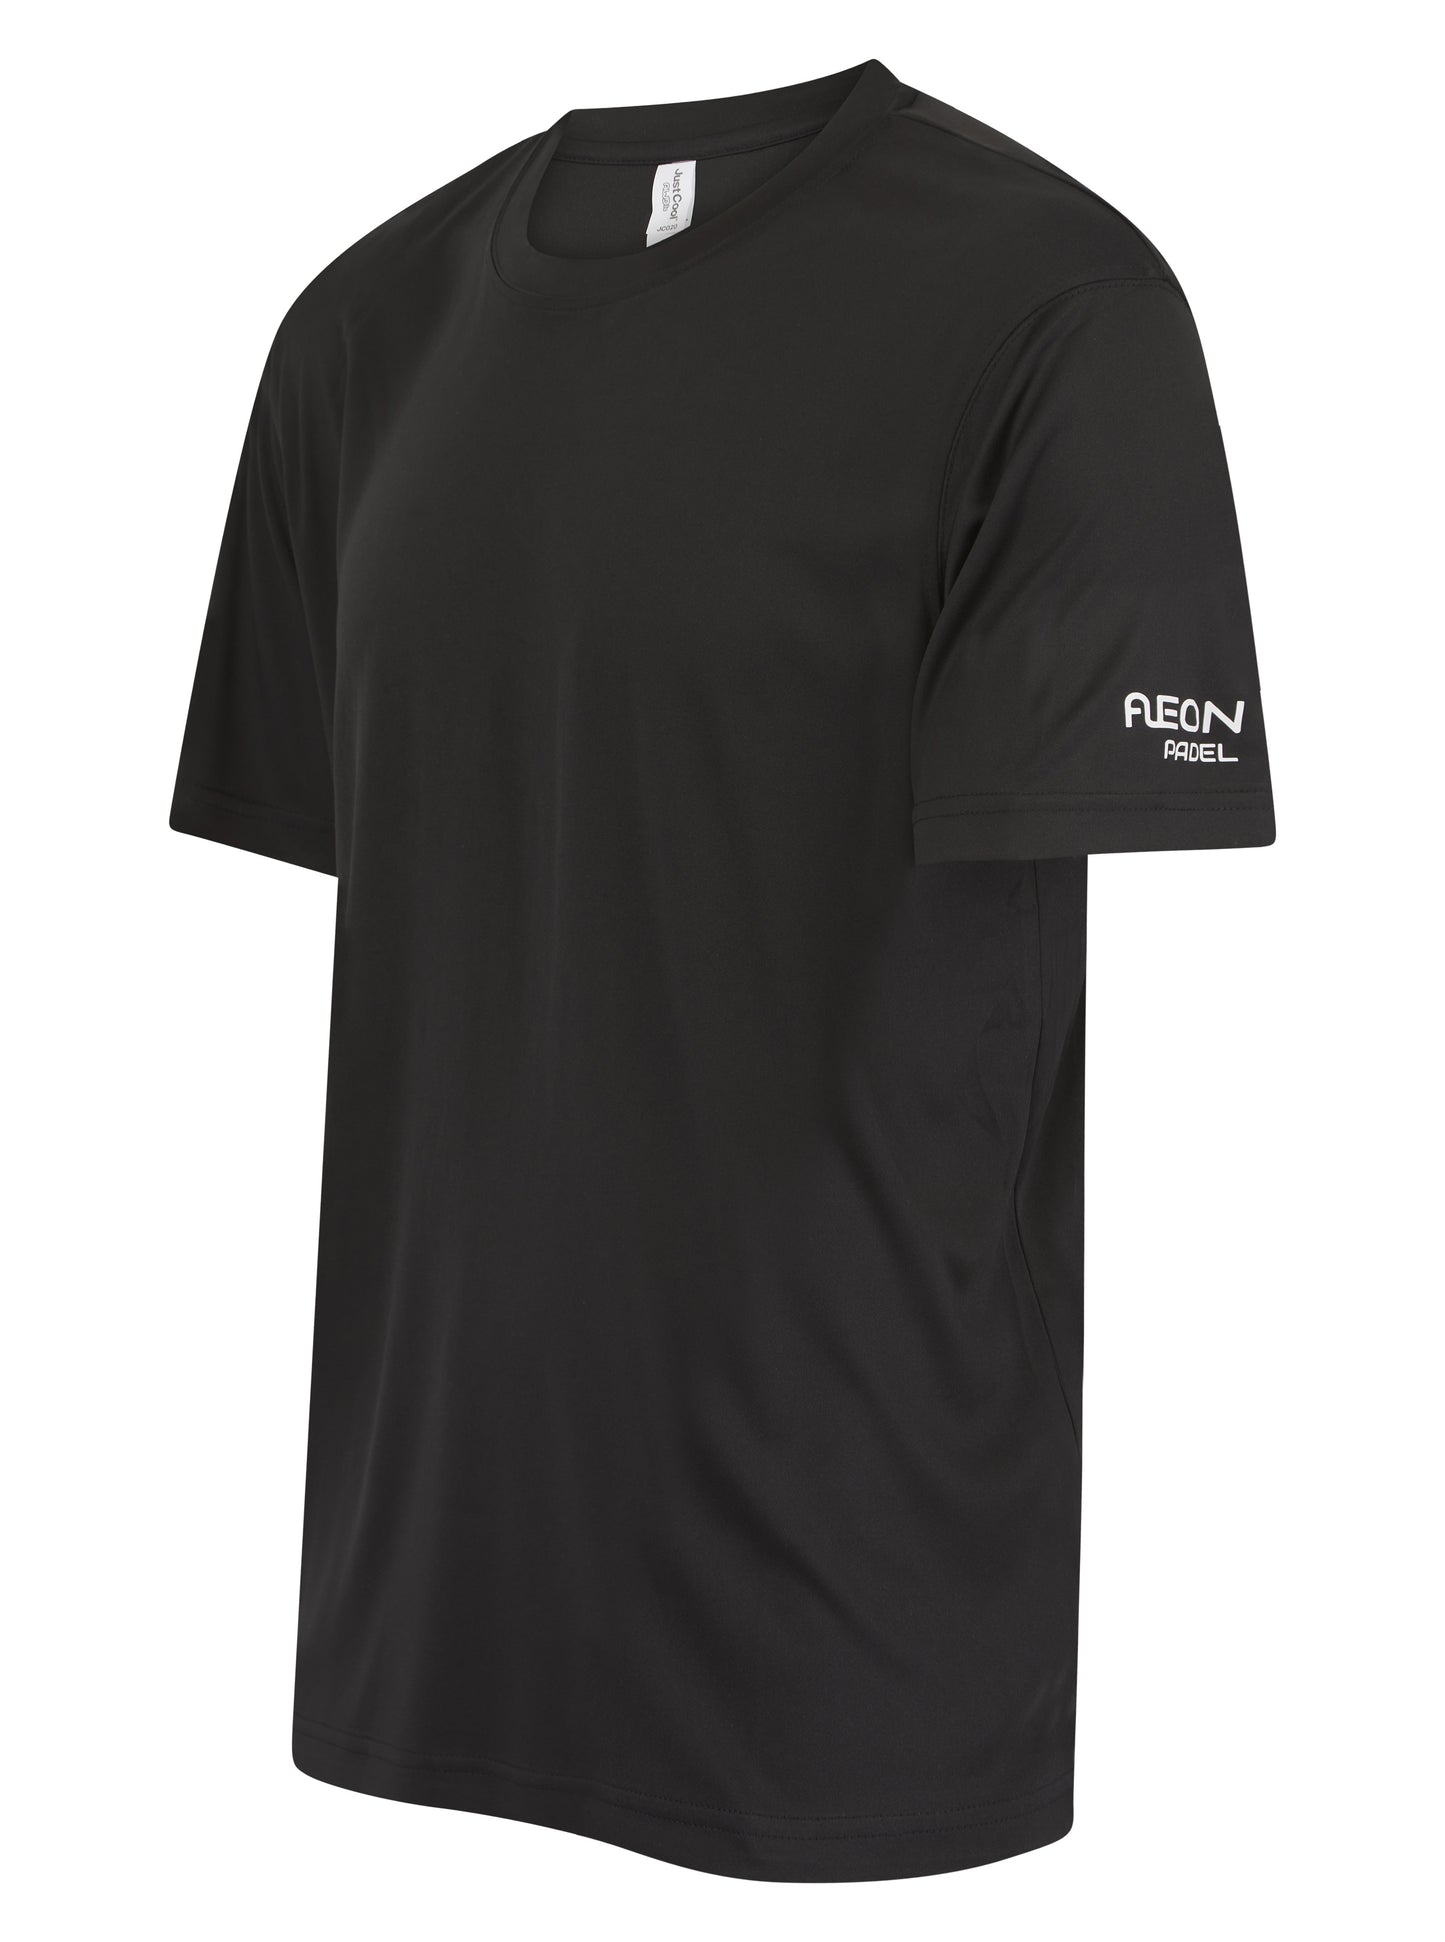 AEON Padel Performance T-Shirt - Black